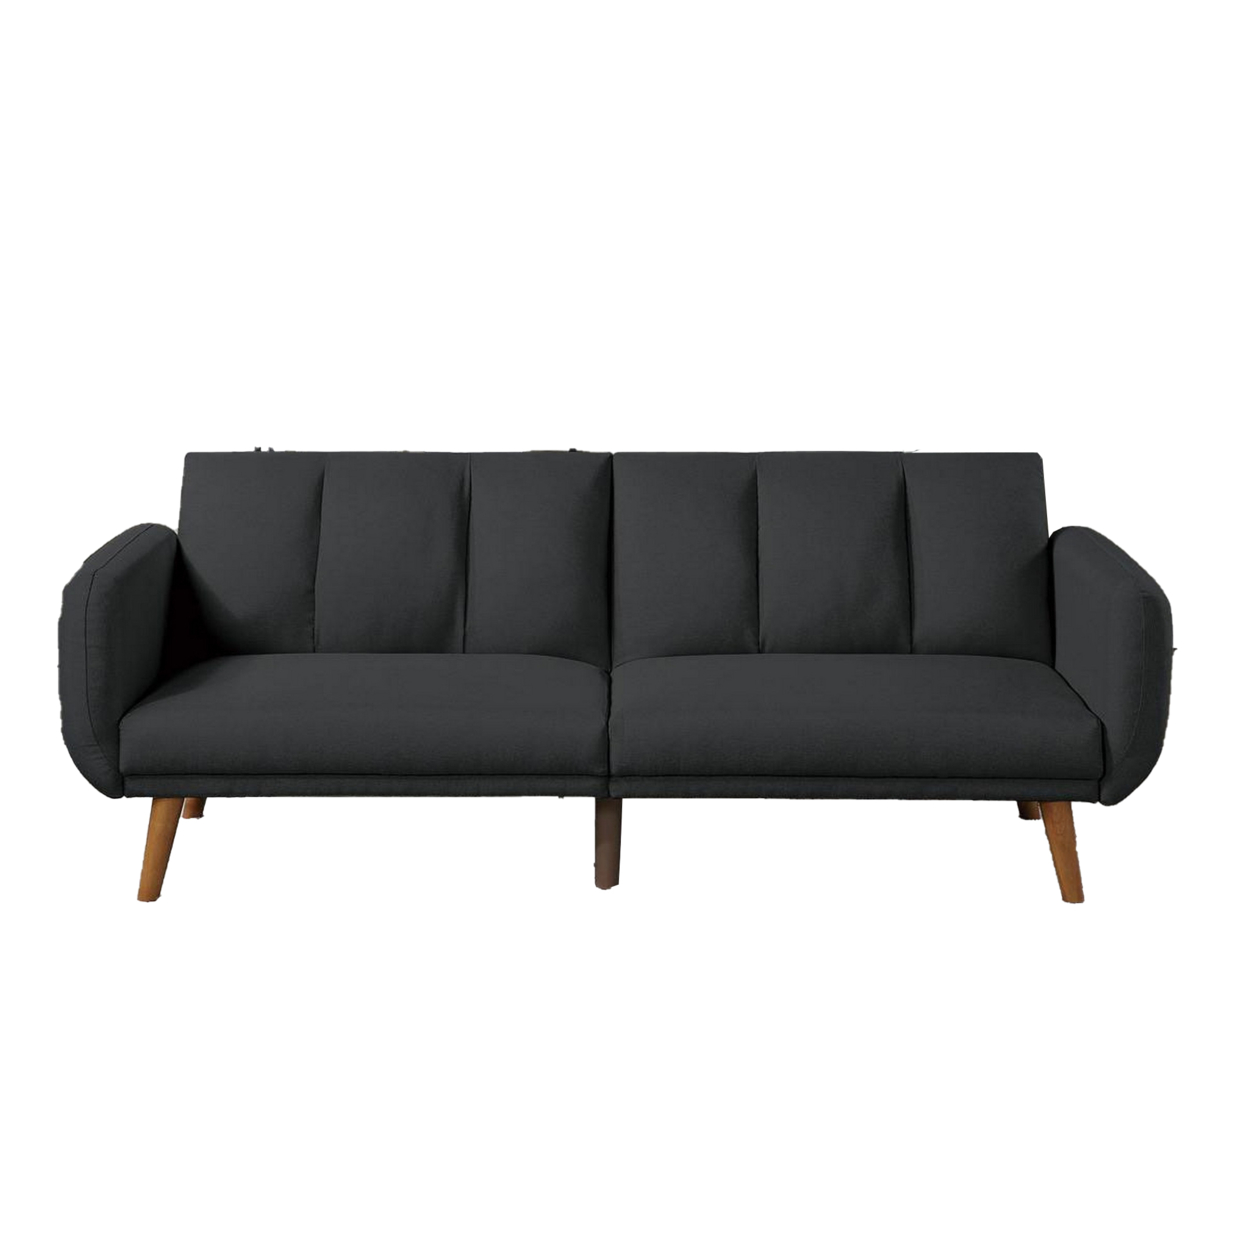 Adjustable Upholstered Sofa With Track Armrests And Angled Legs, Gray- Saltoro Sherpi